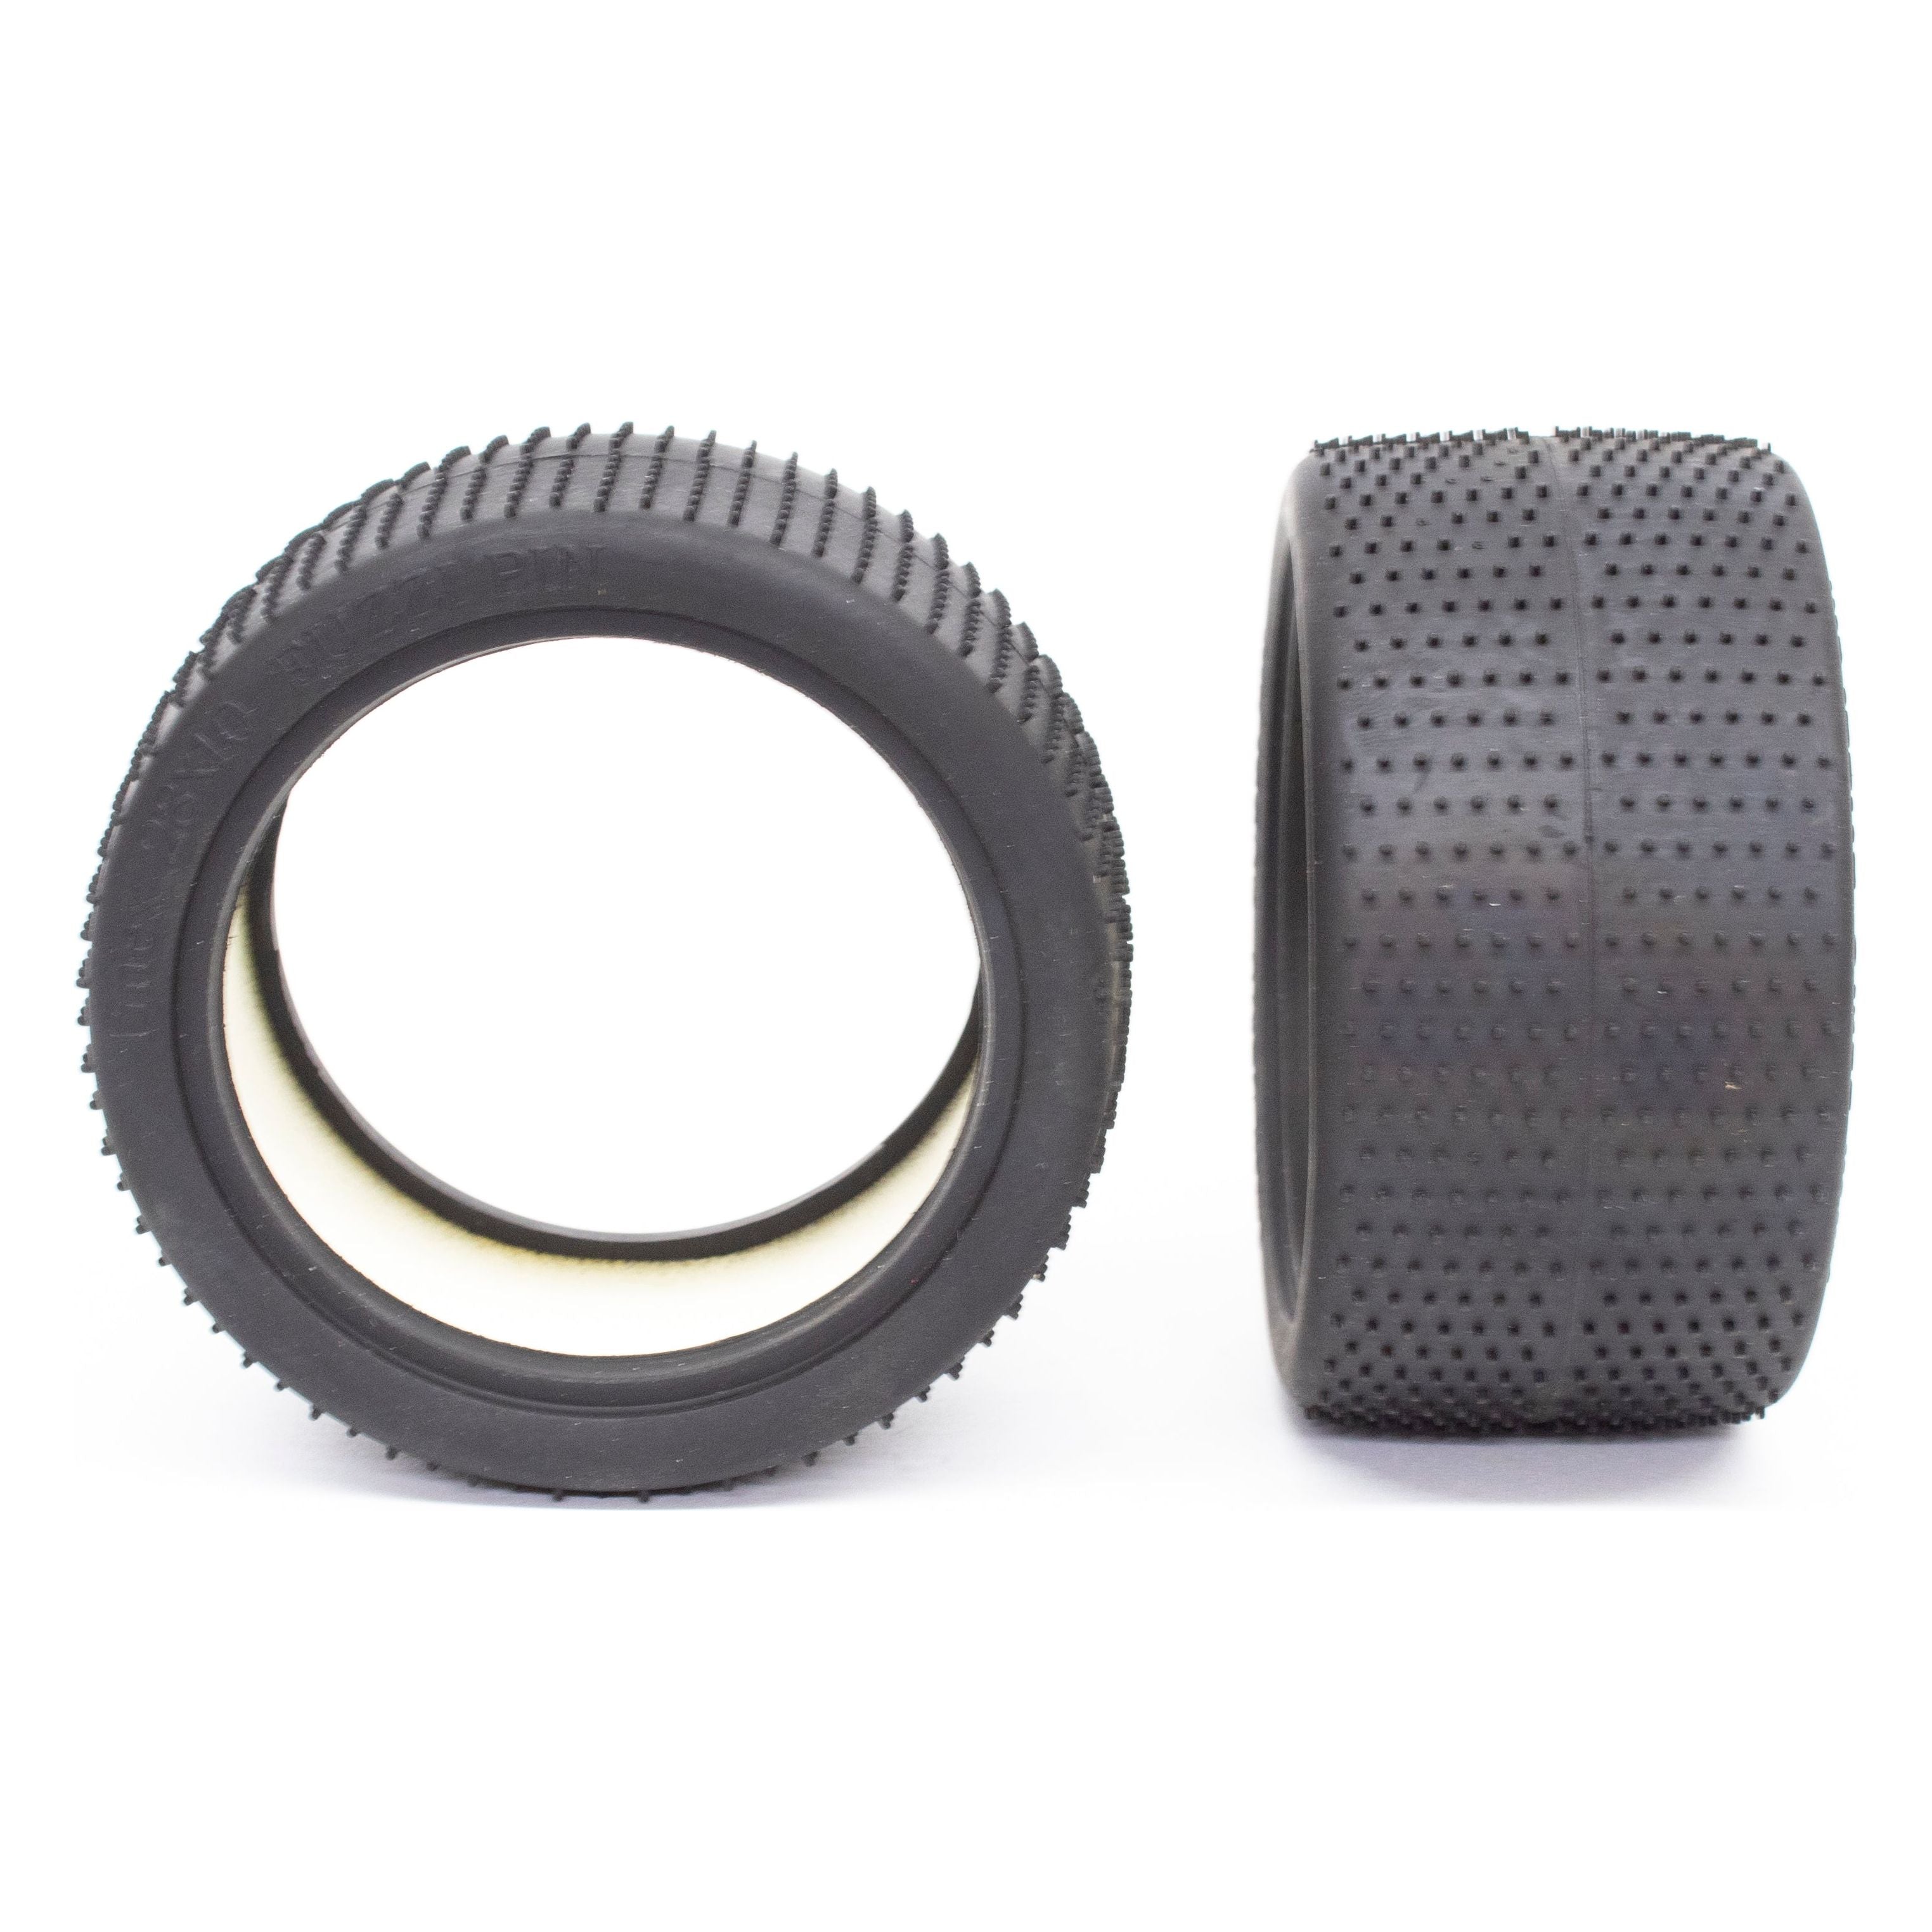 IMEX 2.8 Fuzzy Pin (Soft) Tires (1 Pair)